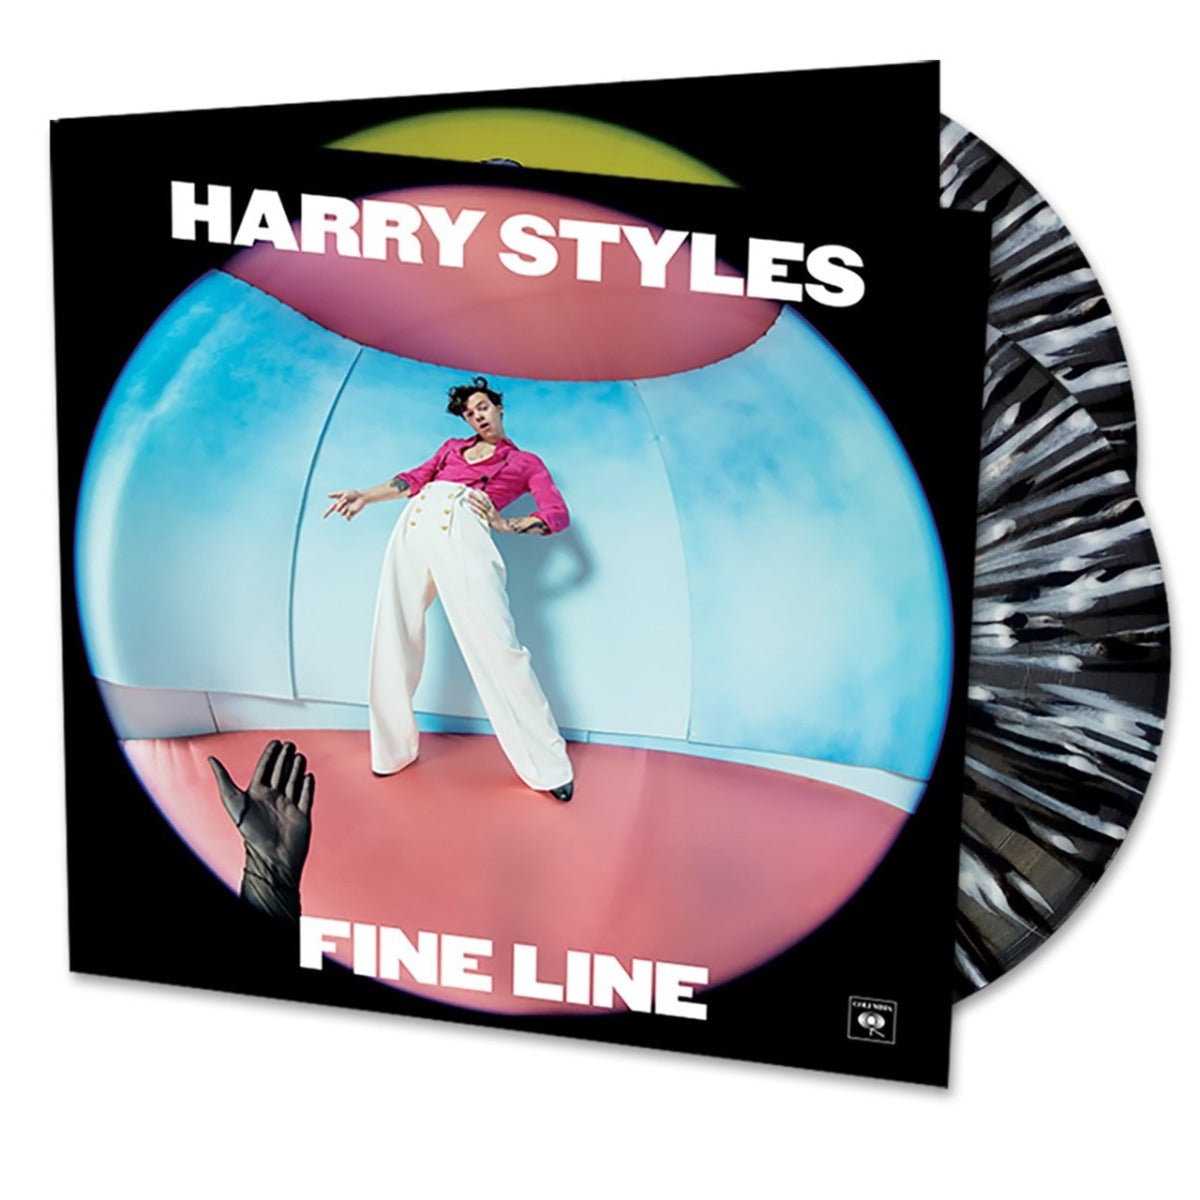 Harry Styles Fine Line Limited Edition 2XLP Vinyl Black & White - IT